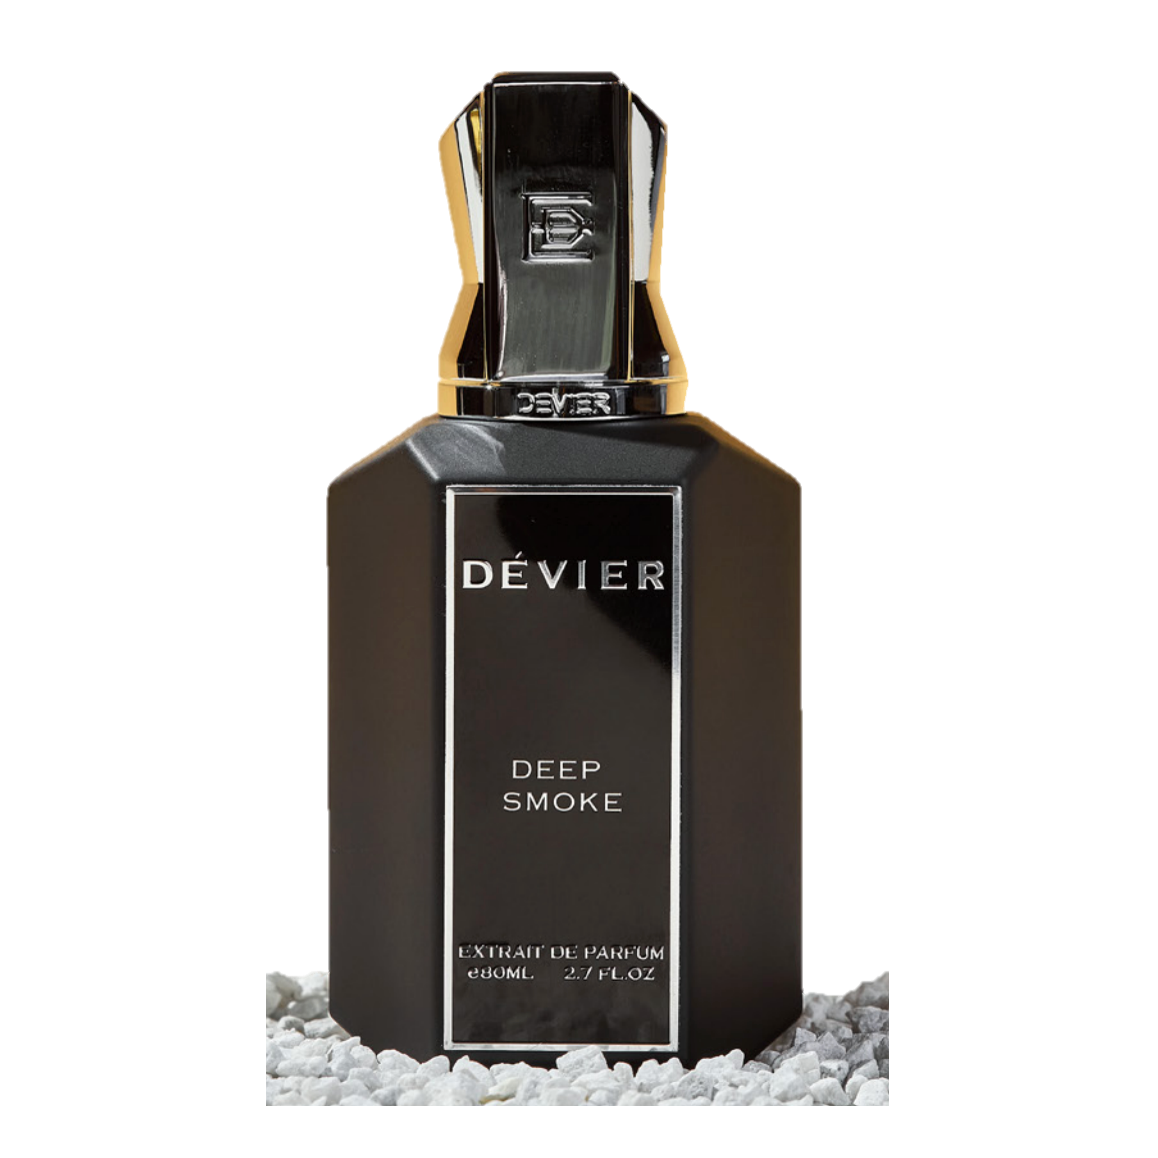 Devier Deep Smoke 80ml Extrait de Parfum Unisex - Attoperfumes